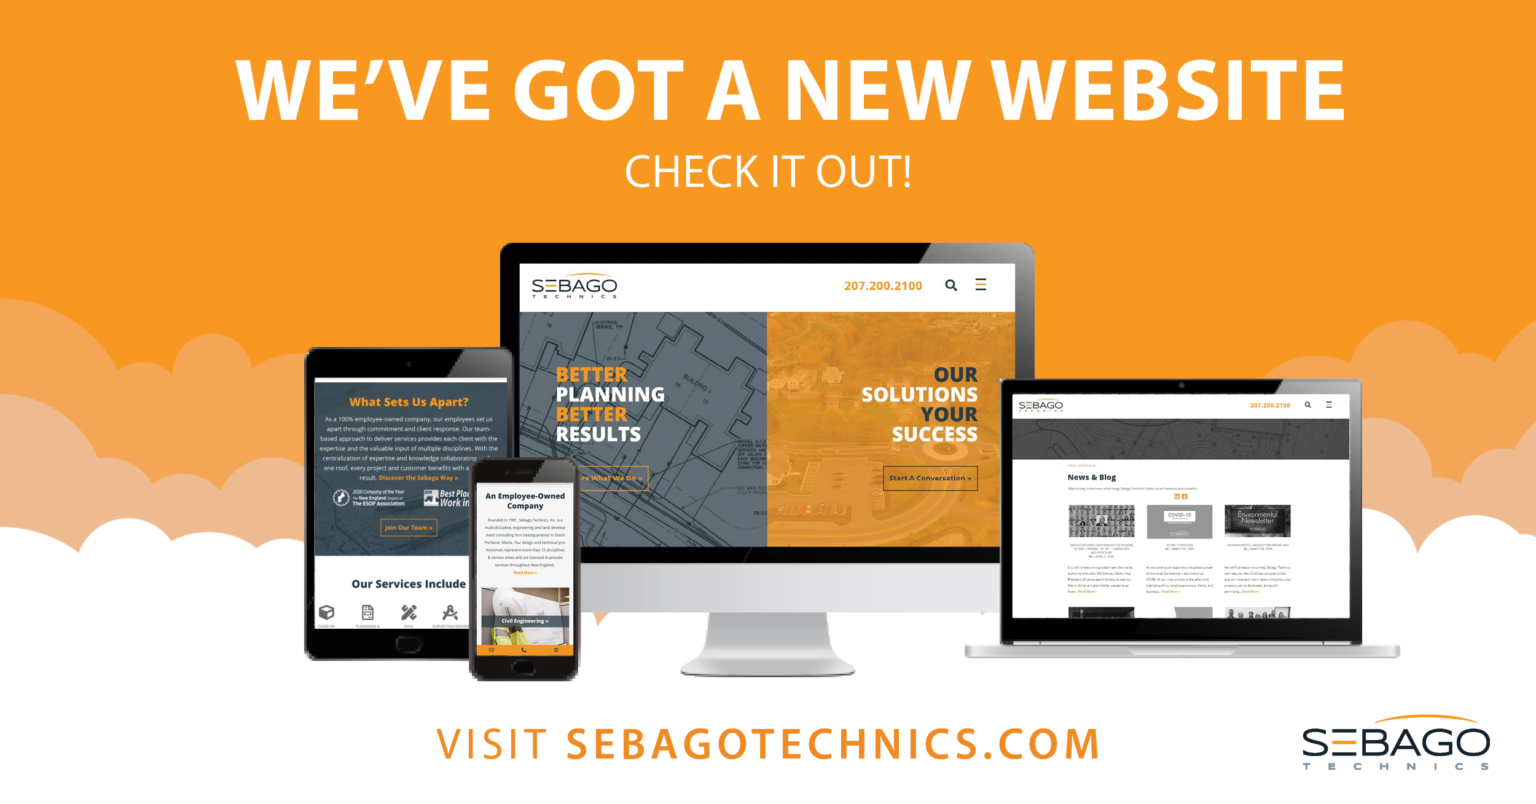 Sebago Technics Announces Launch of New Website